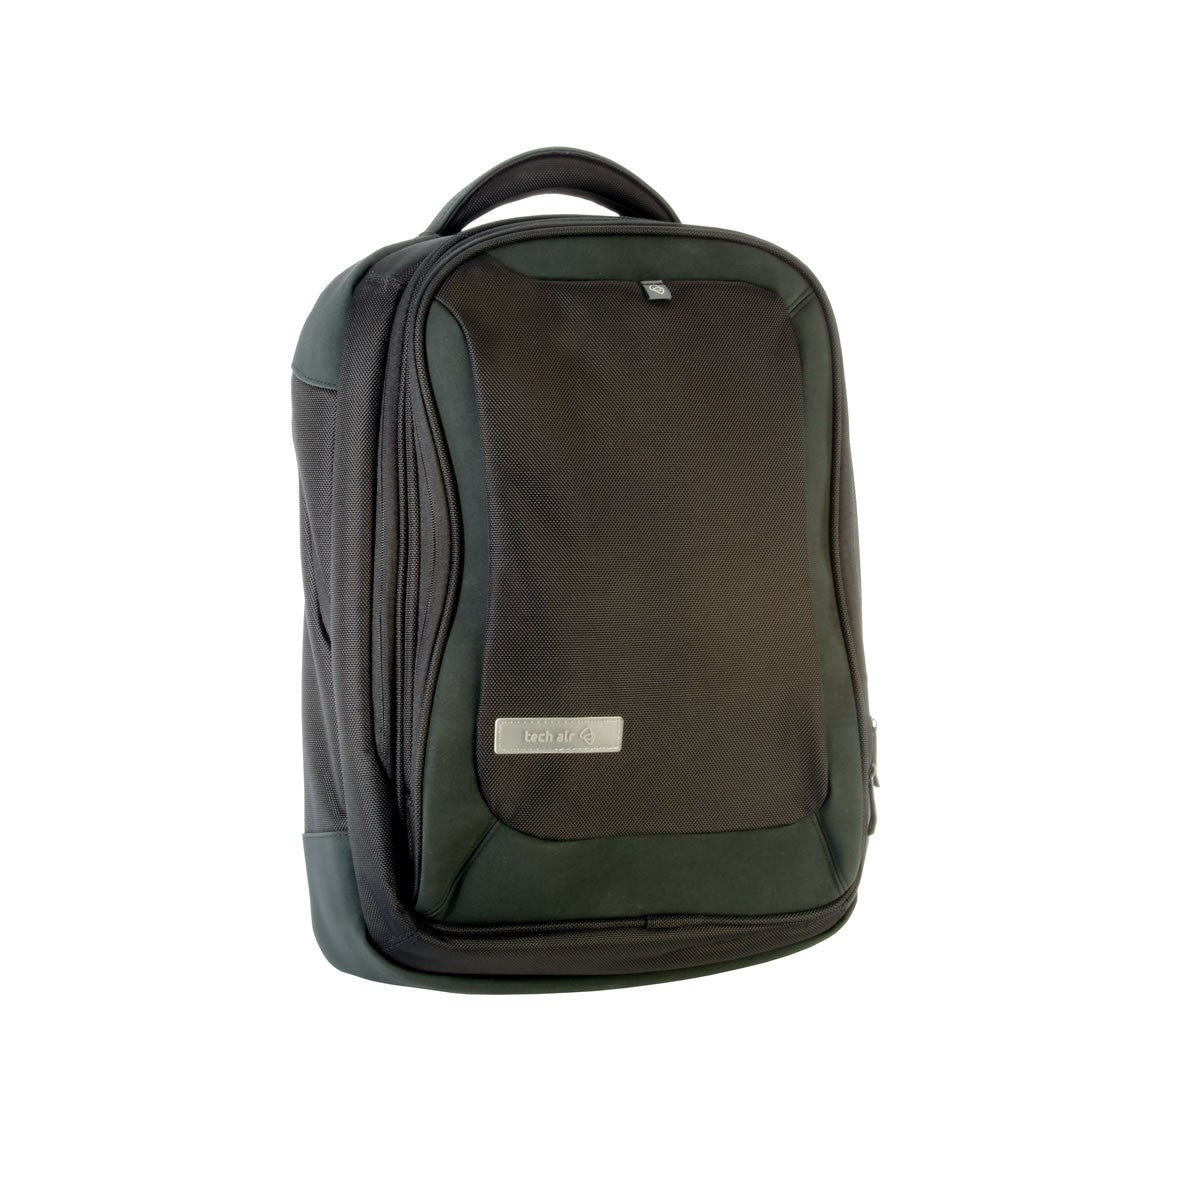 Tech air Series 5 Laptop Backpack - Laptop Carry Bag - 15.6" - Black